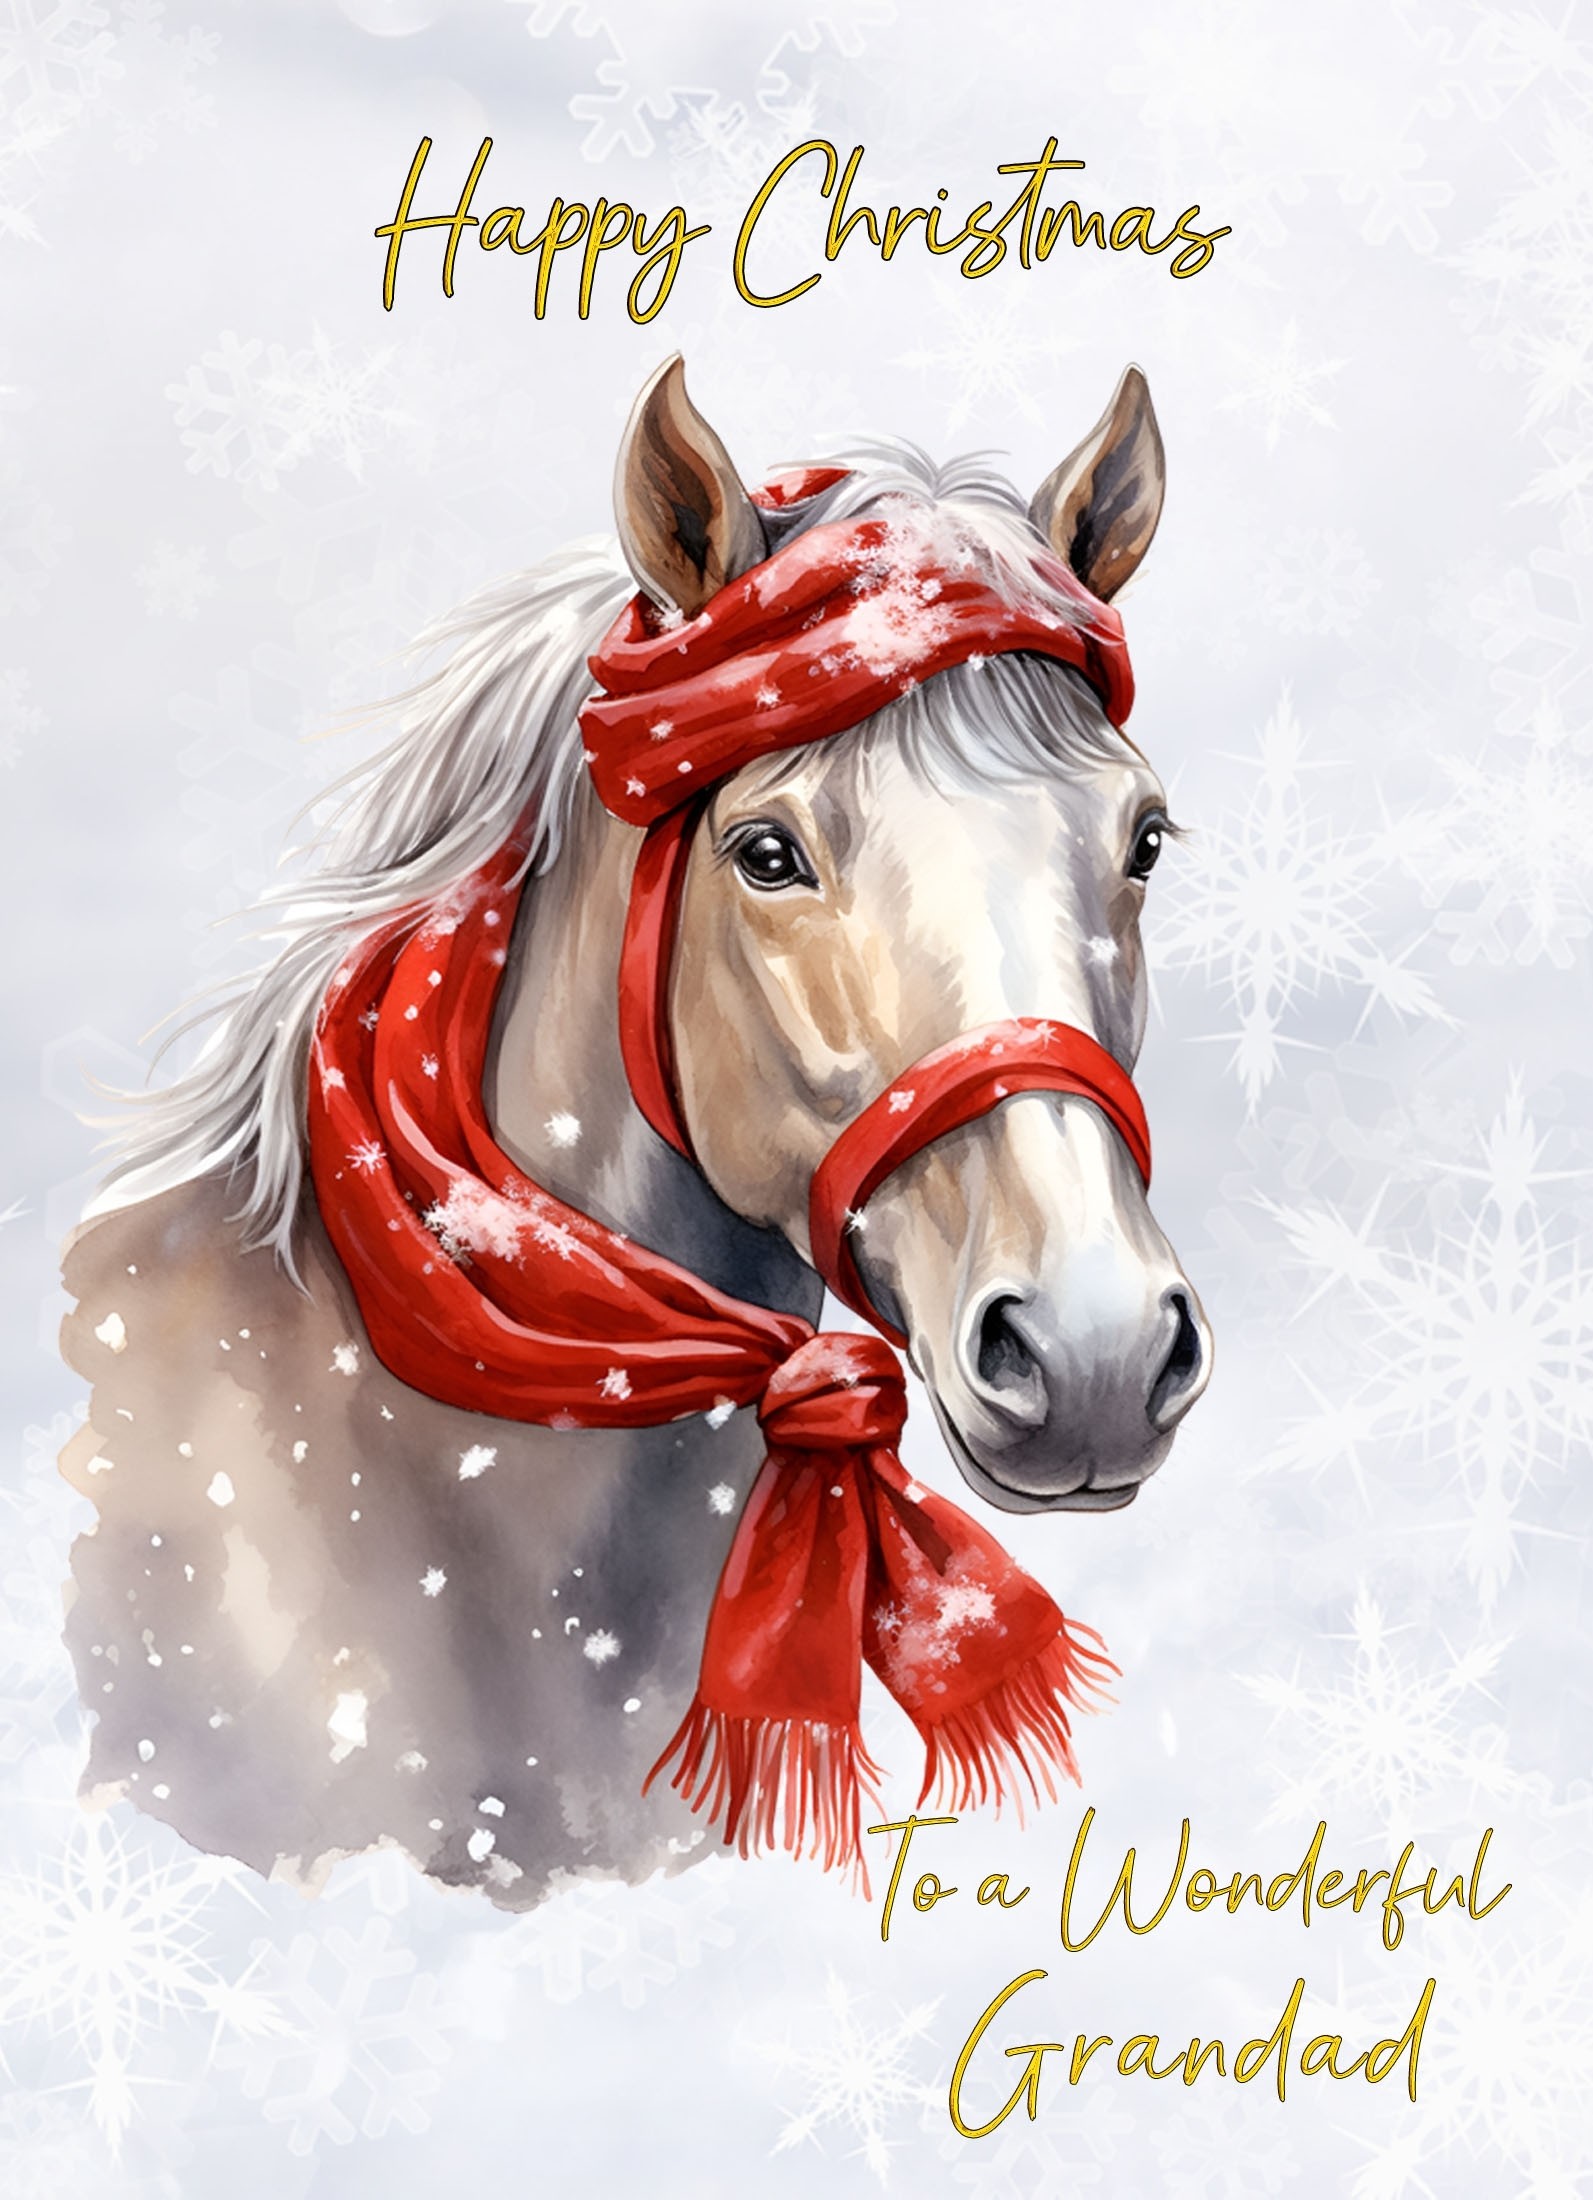 Christmas Card For Grandad (Horse Art Red)